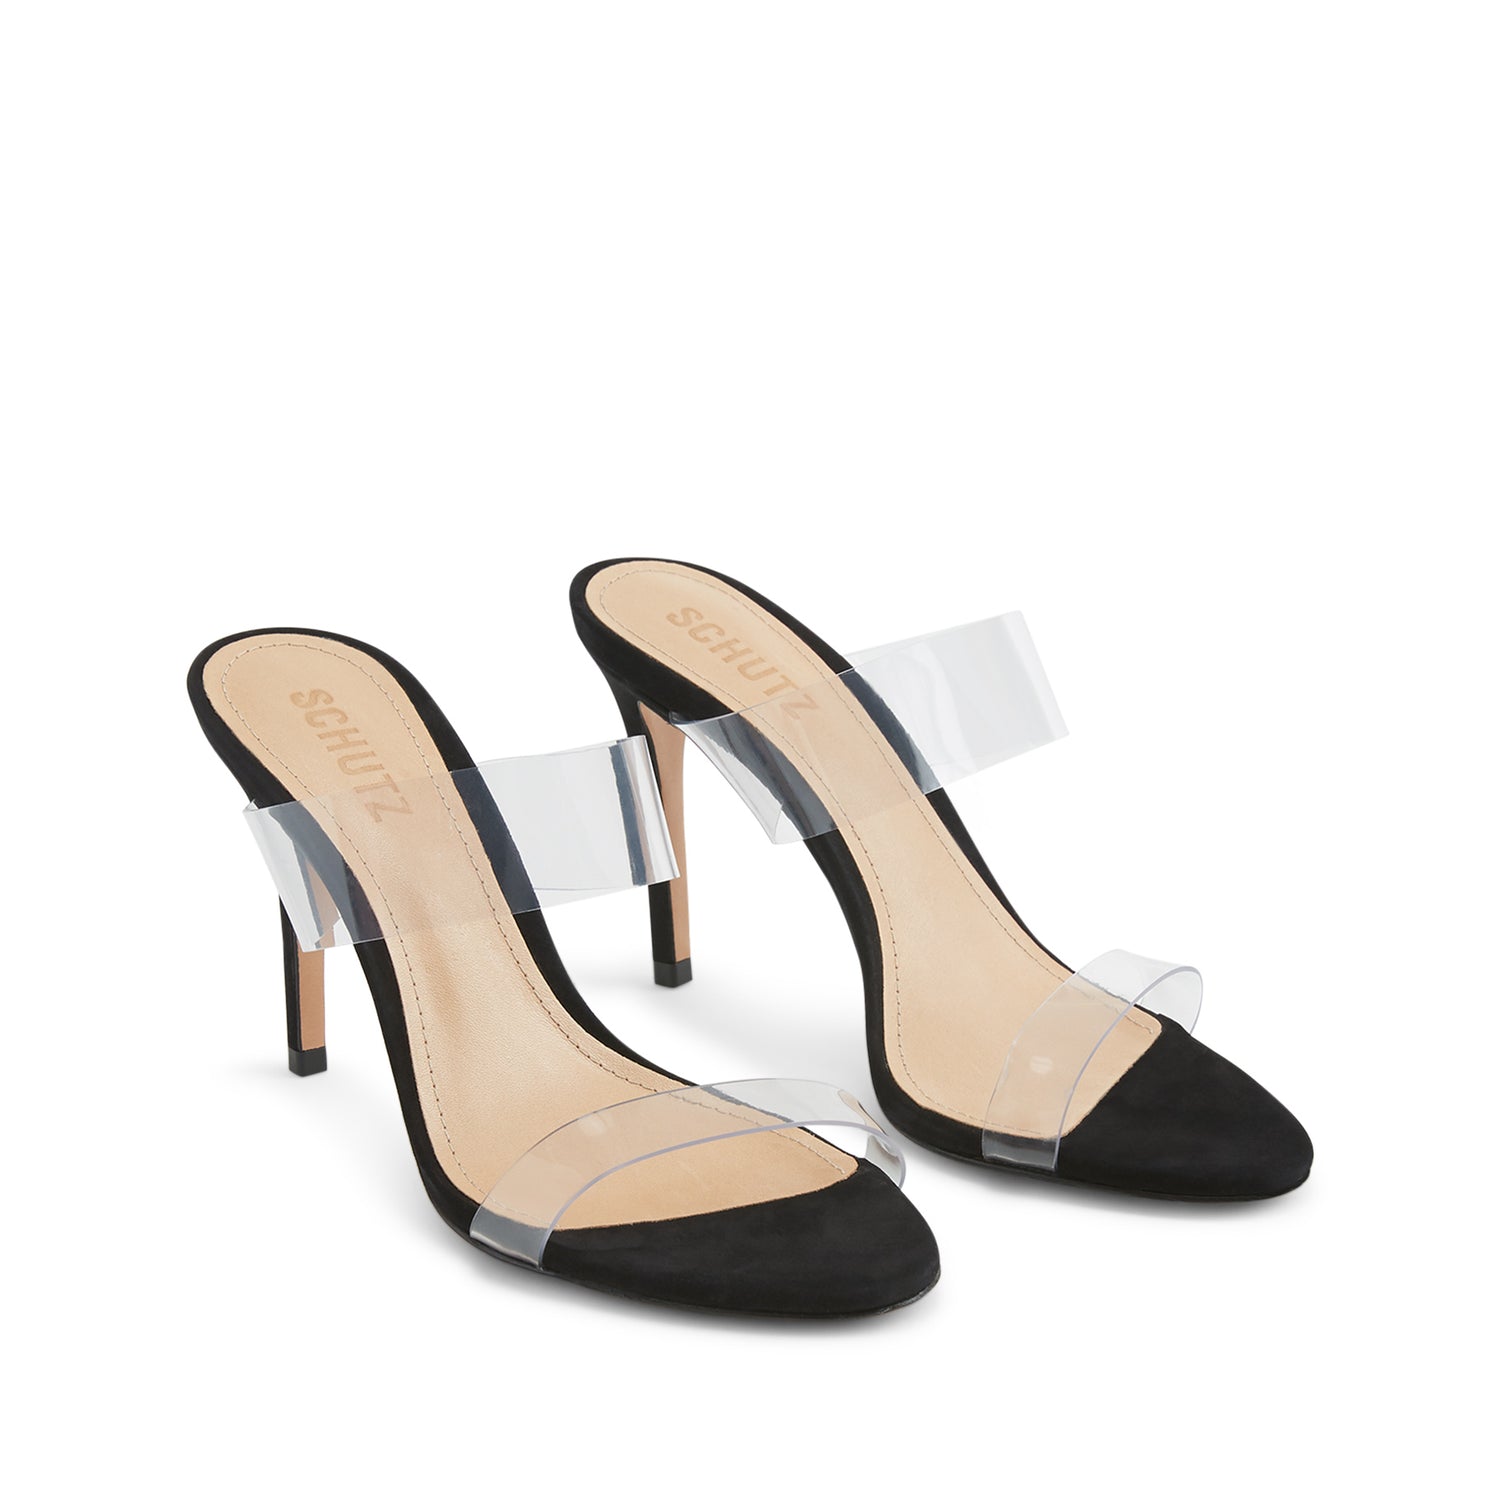 Black Pointed Toe Bow Shoes  Women's Transparent Sandal